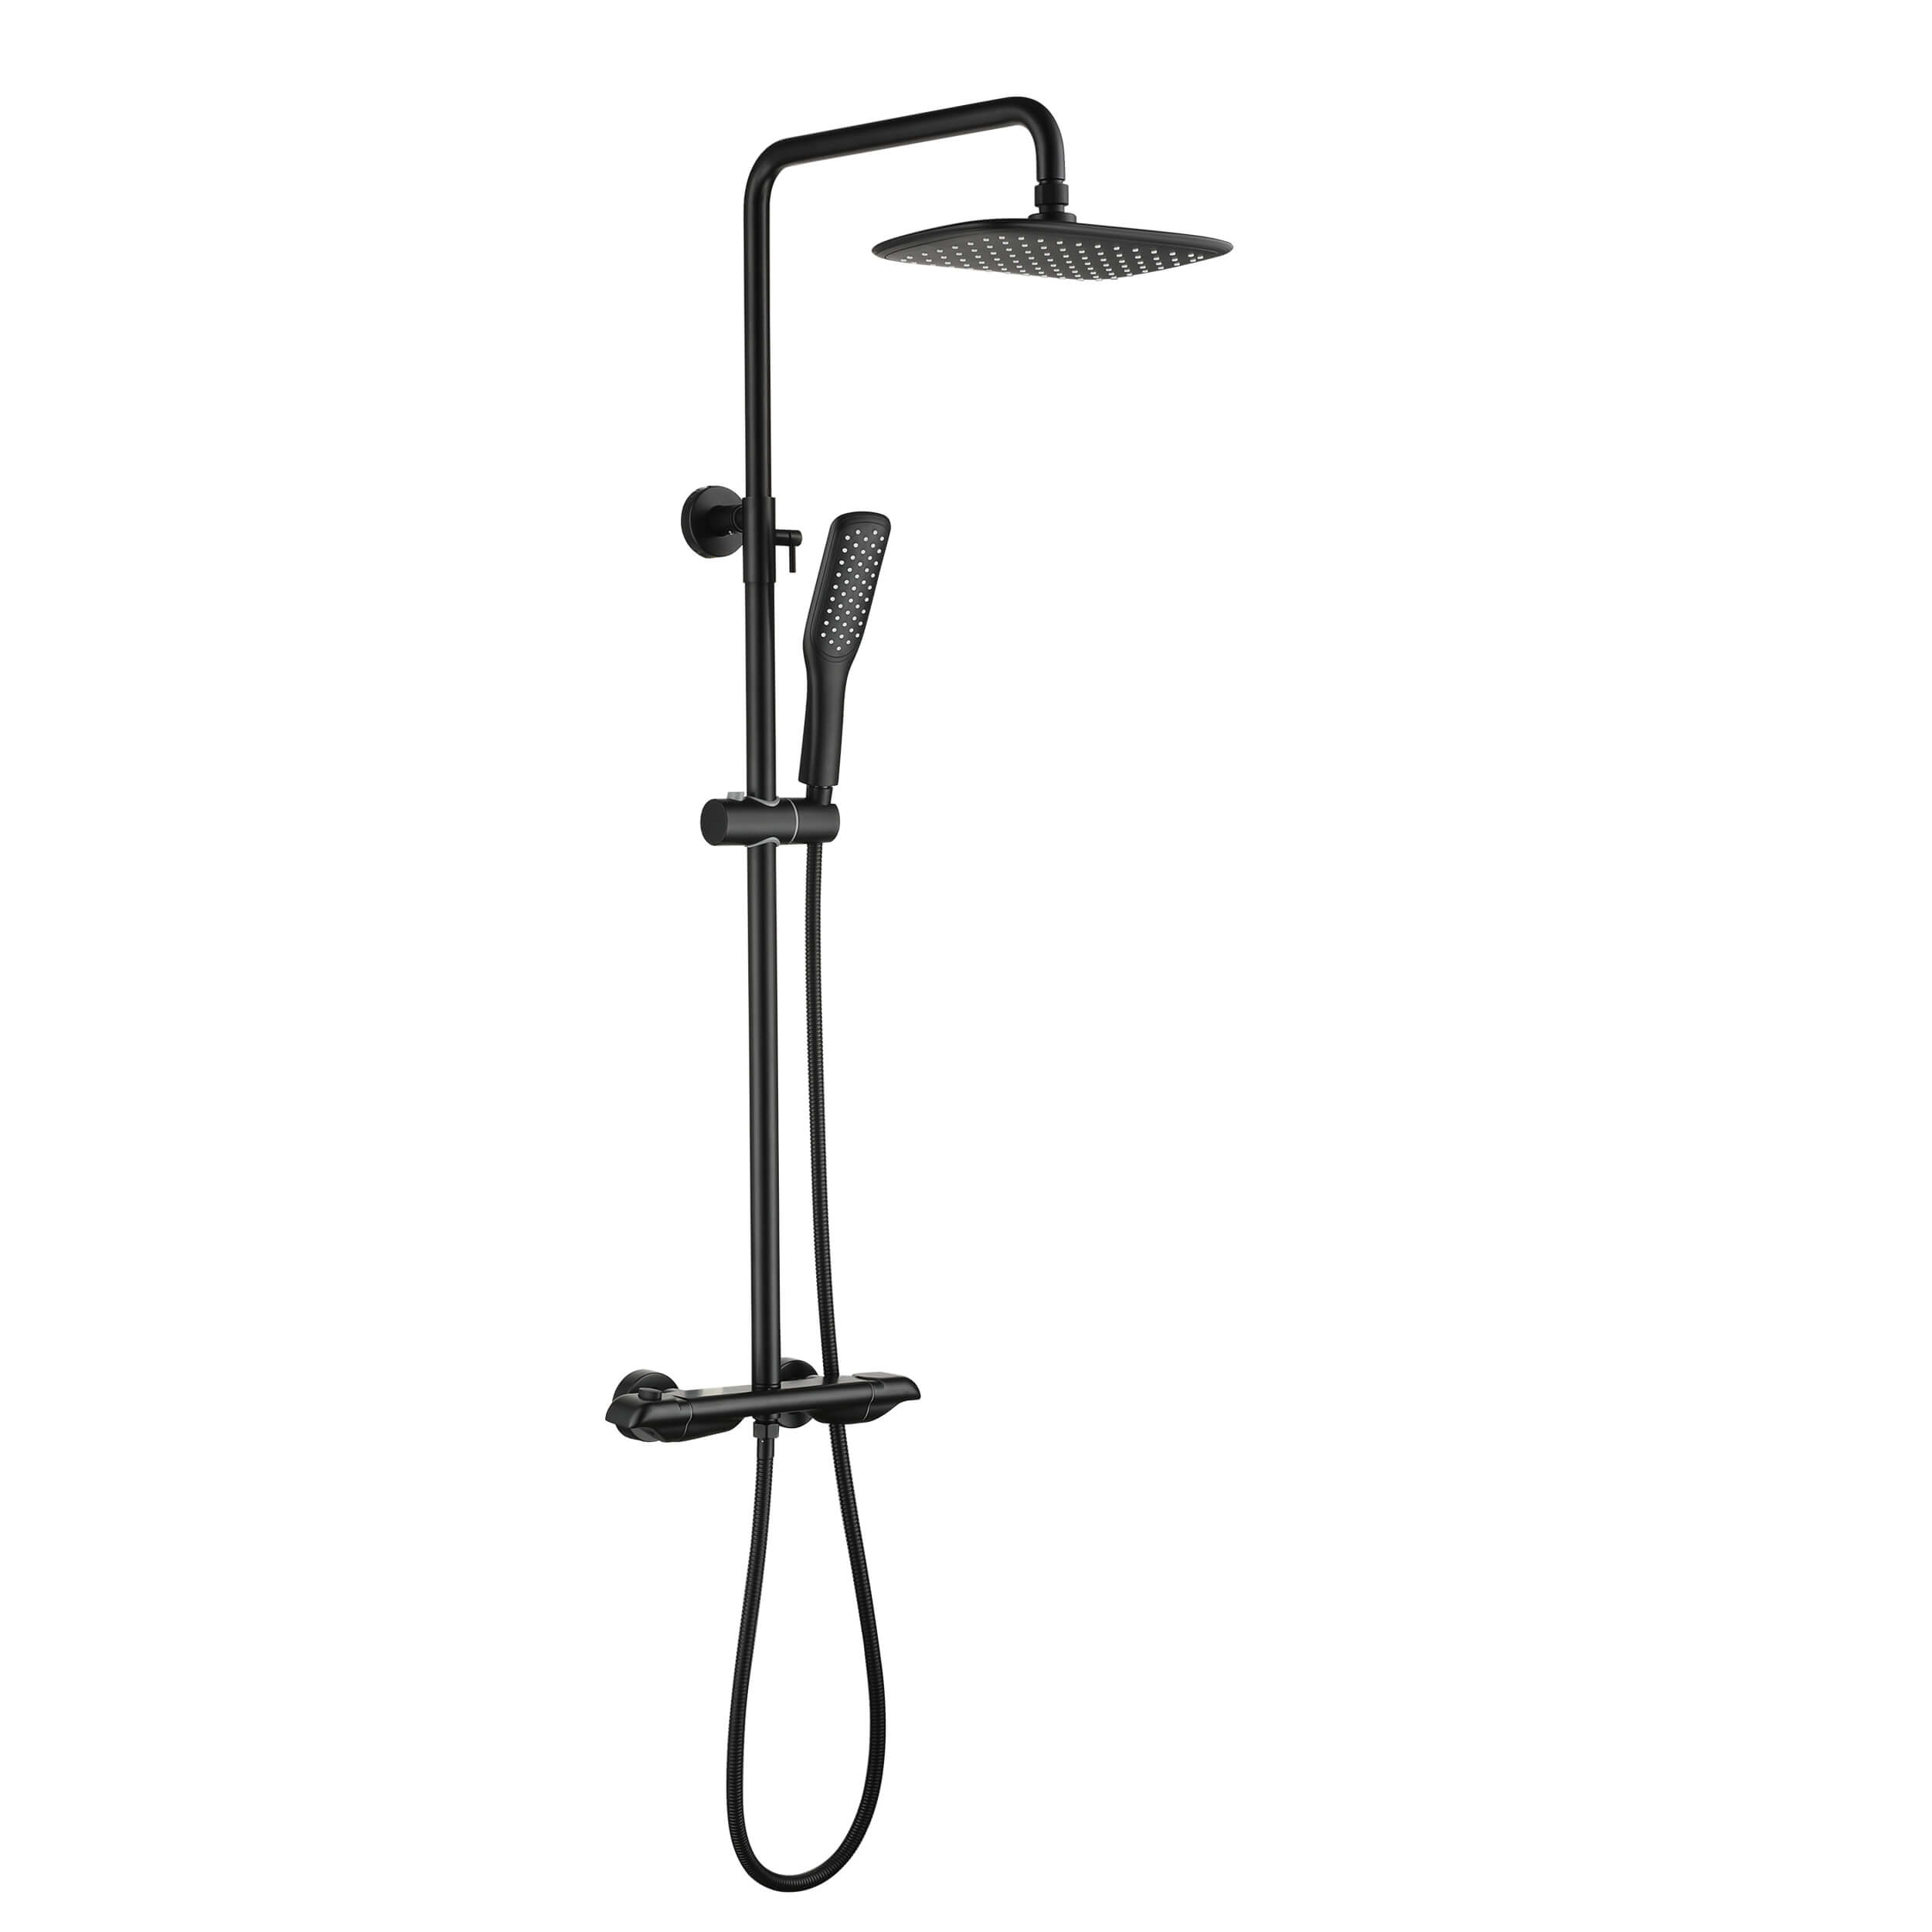 CASAINC Matte Black Finish Shower System